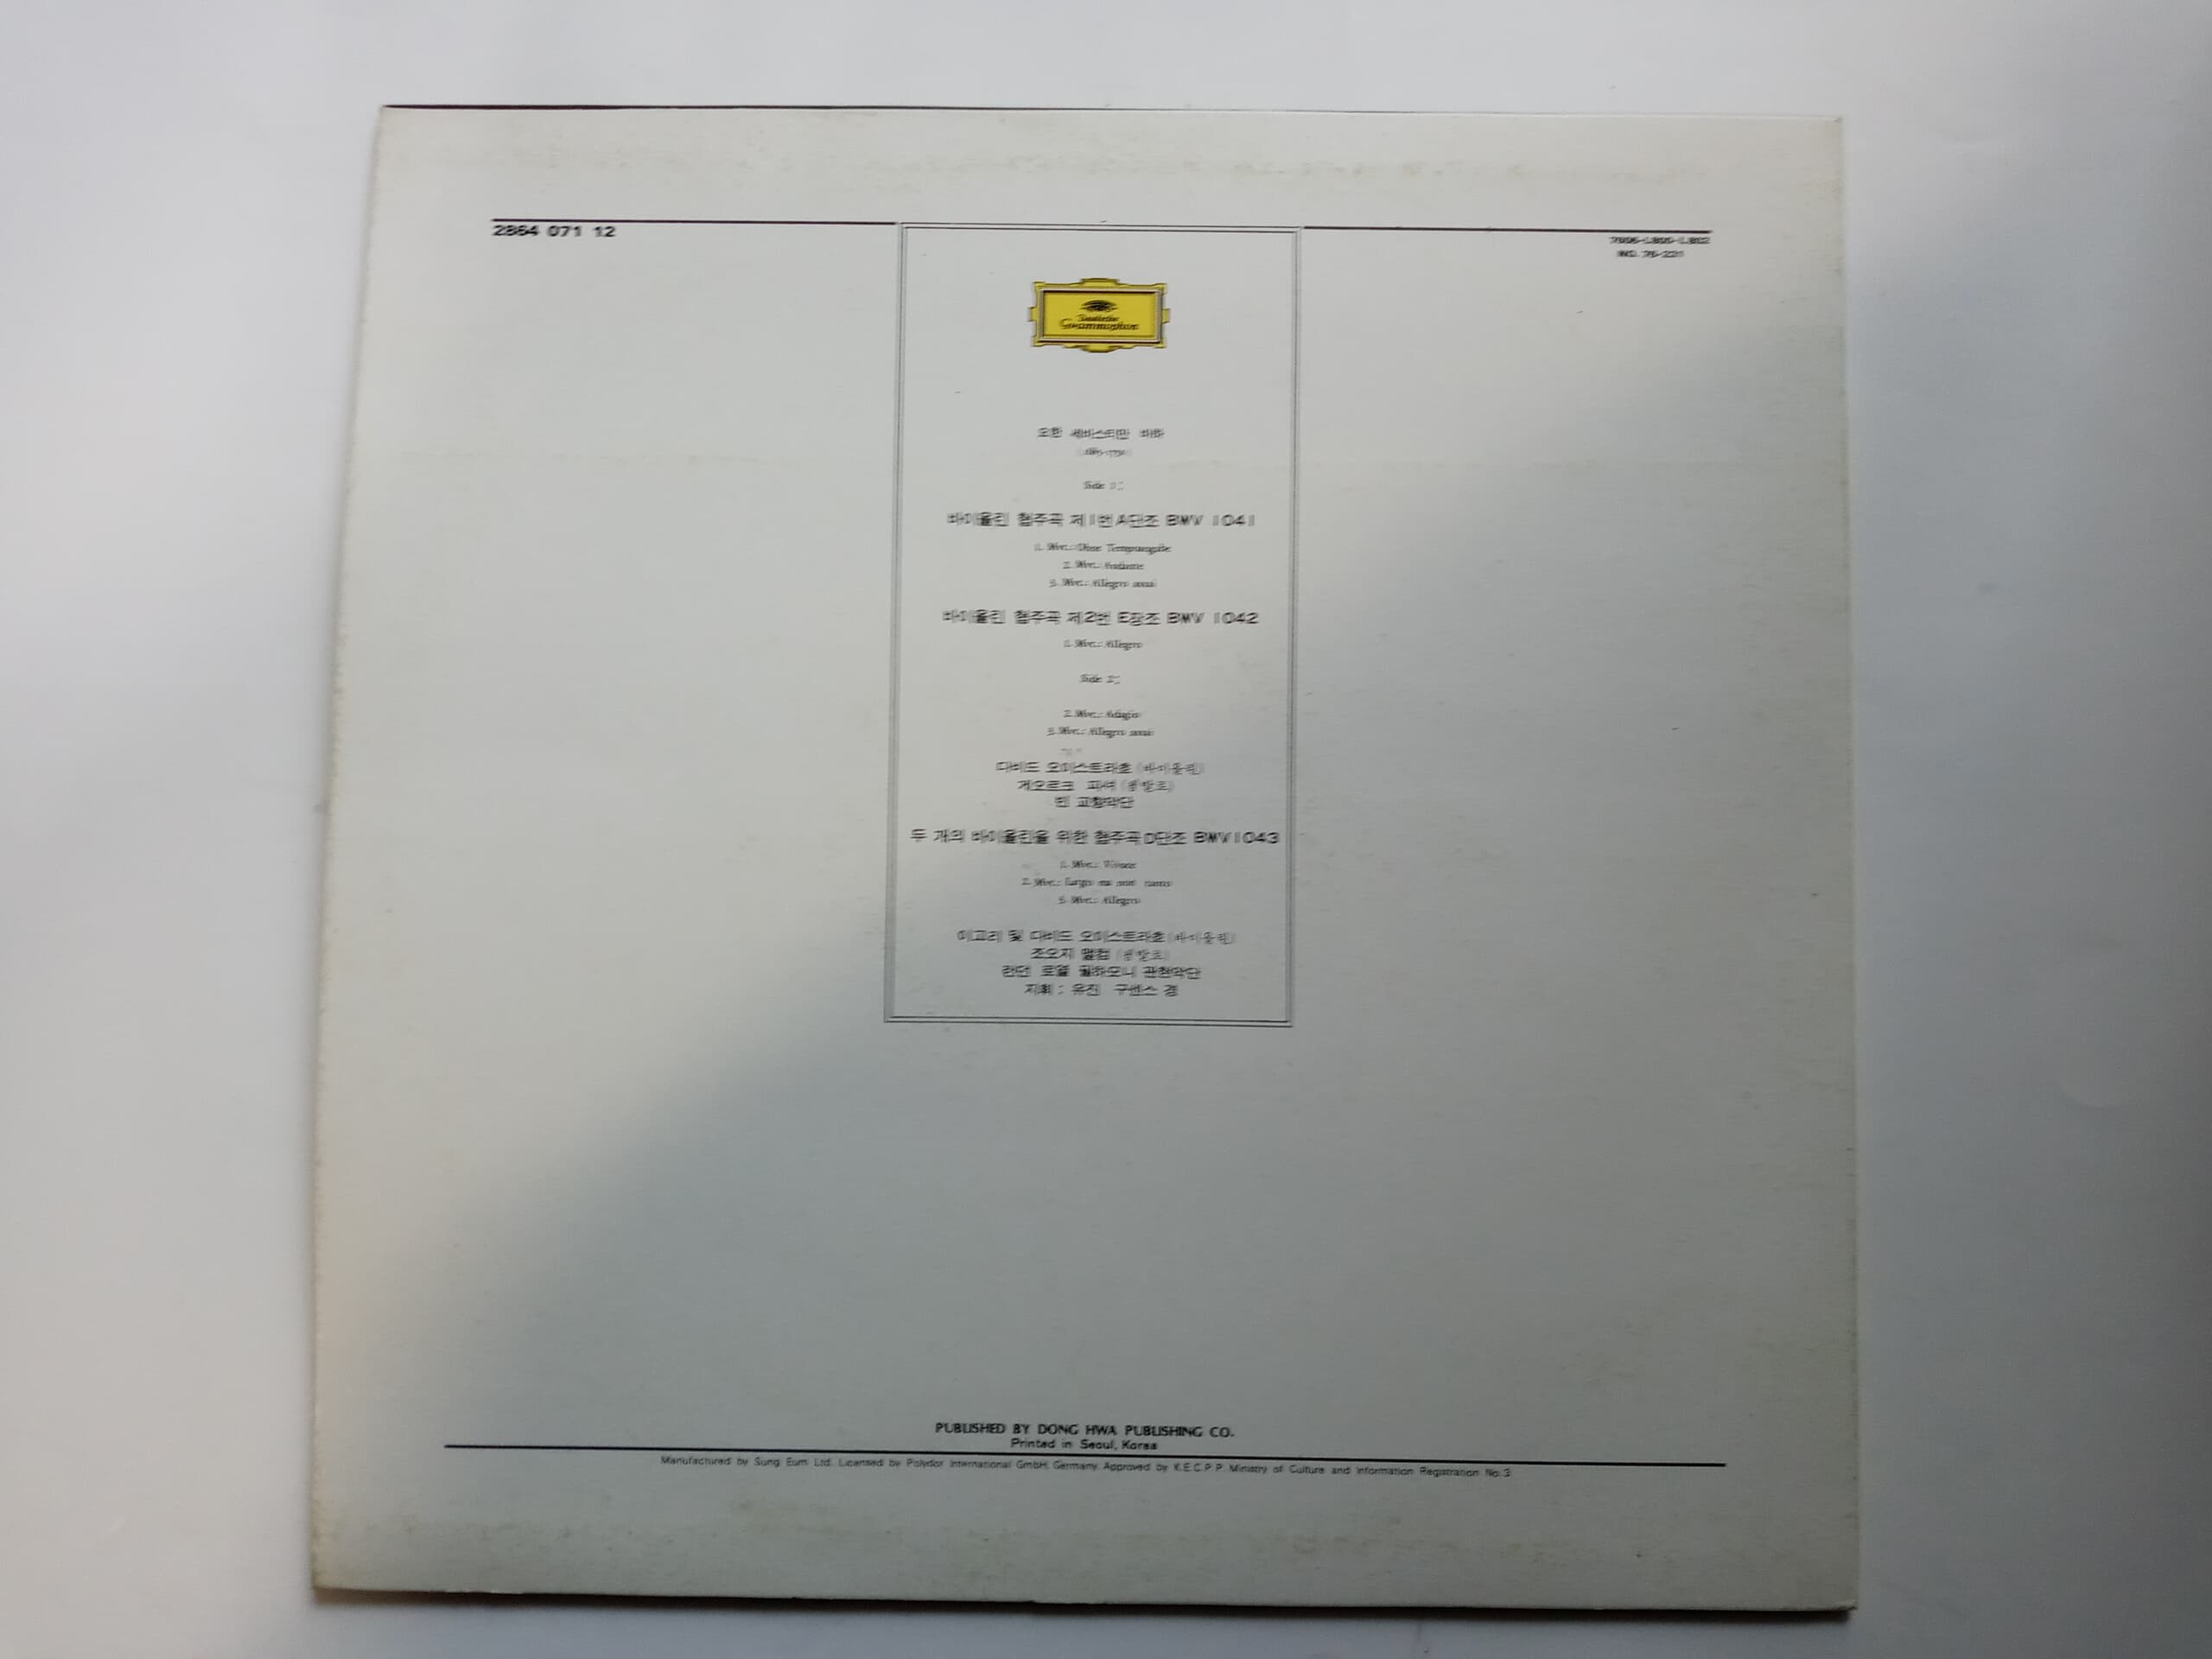 LP(엘피 레코드) 바하: 바이올린 협주곡 1~2번, 두개의 바이올린을 위한 협주곡 - 다비드, 이고르 오이스트라흐 